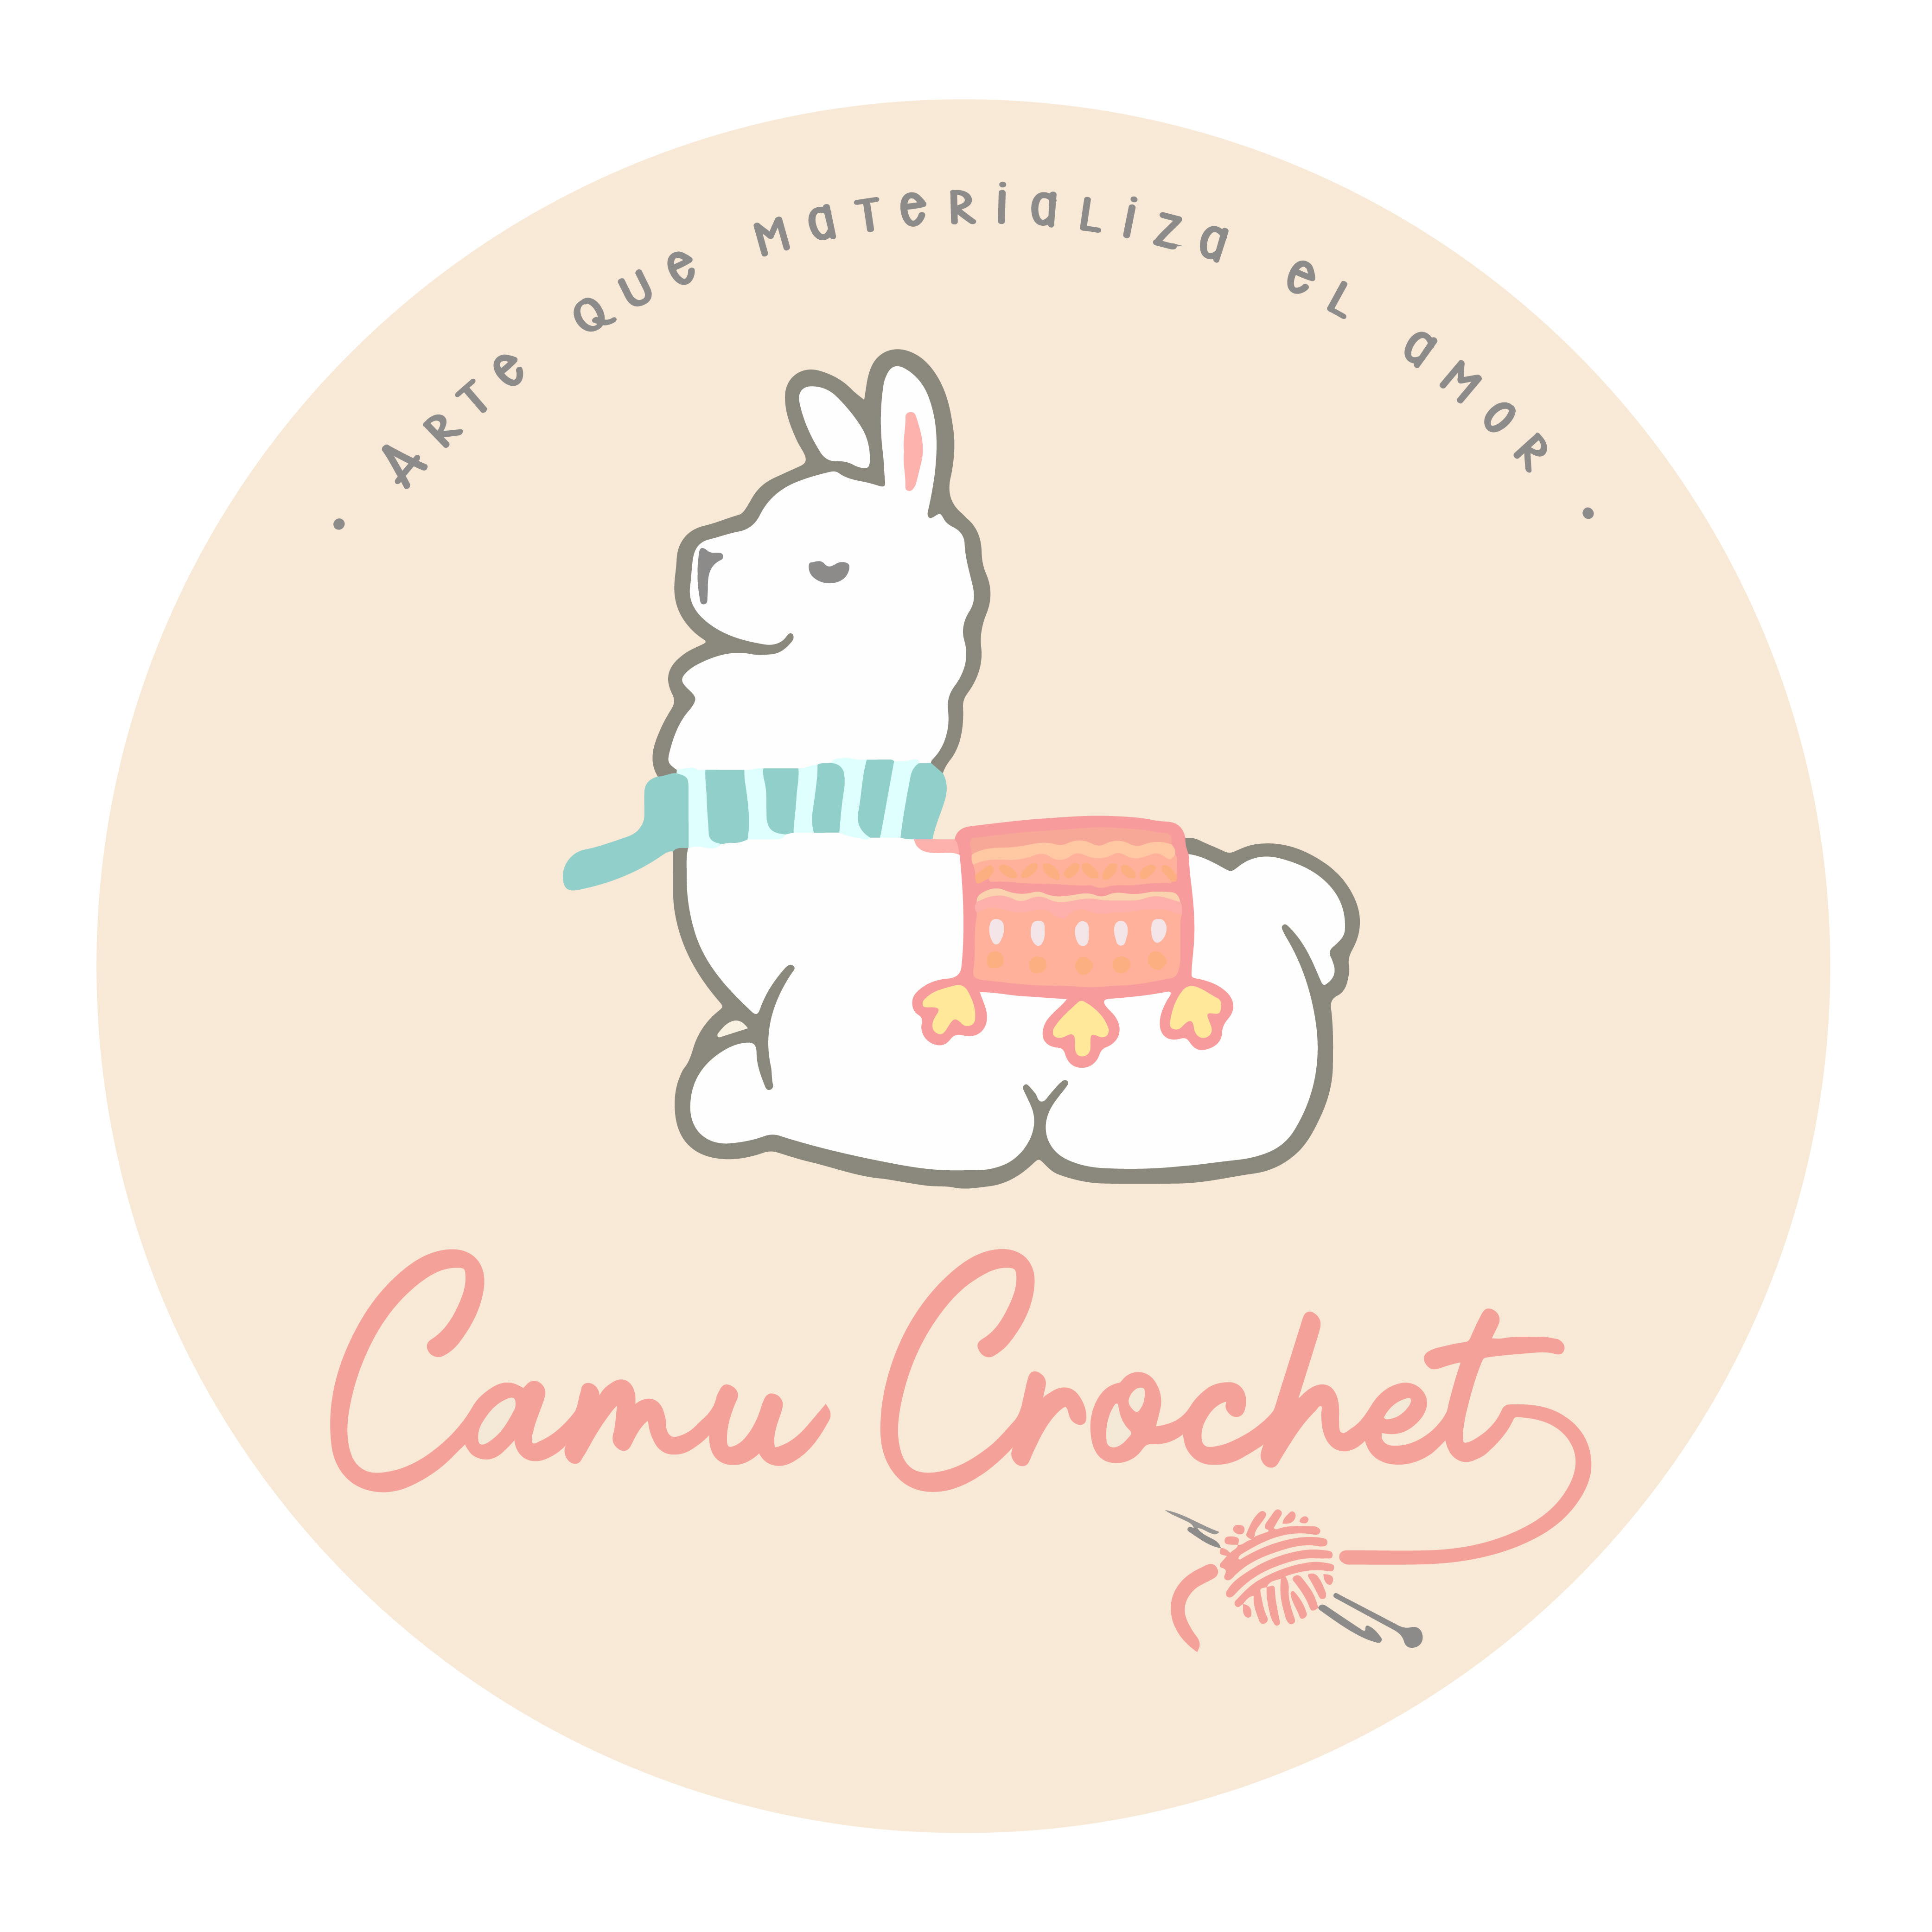 Camu Crochet